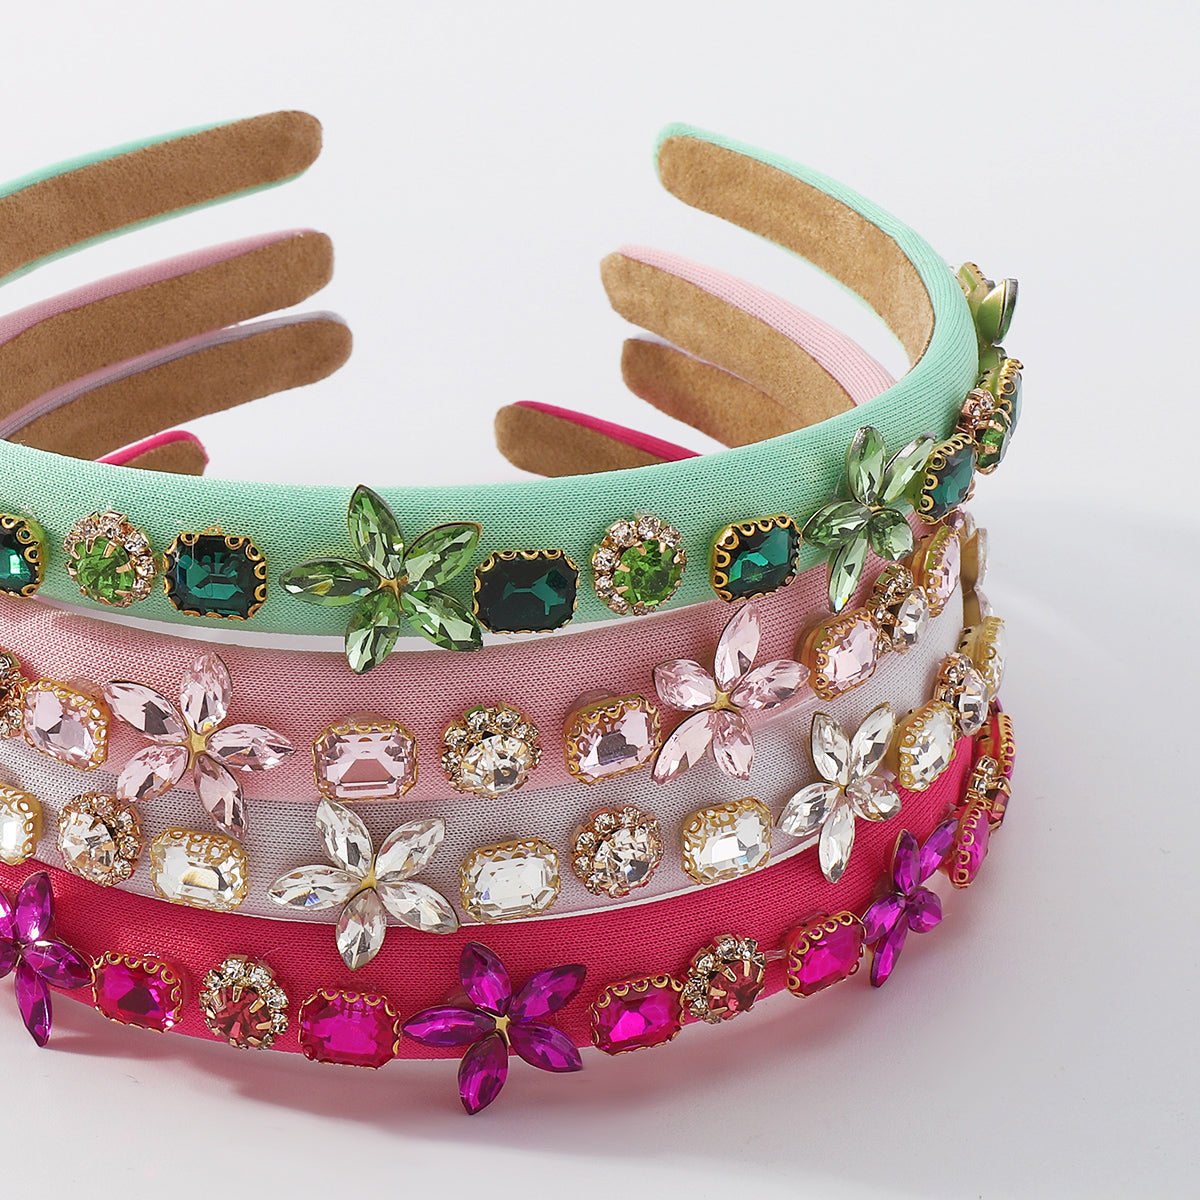 Shiny Handmade Crystal Flower Colorful Headband medyjewelry